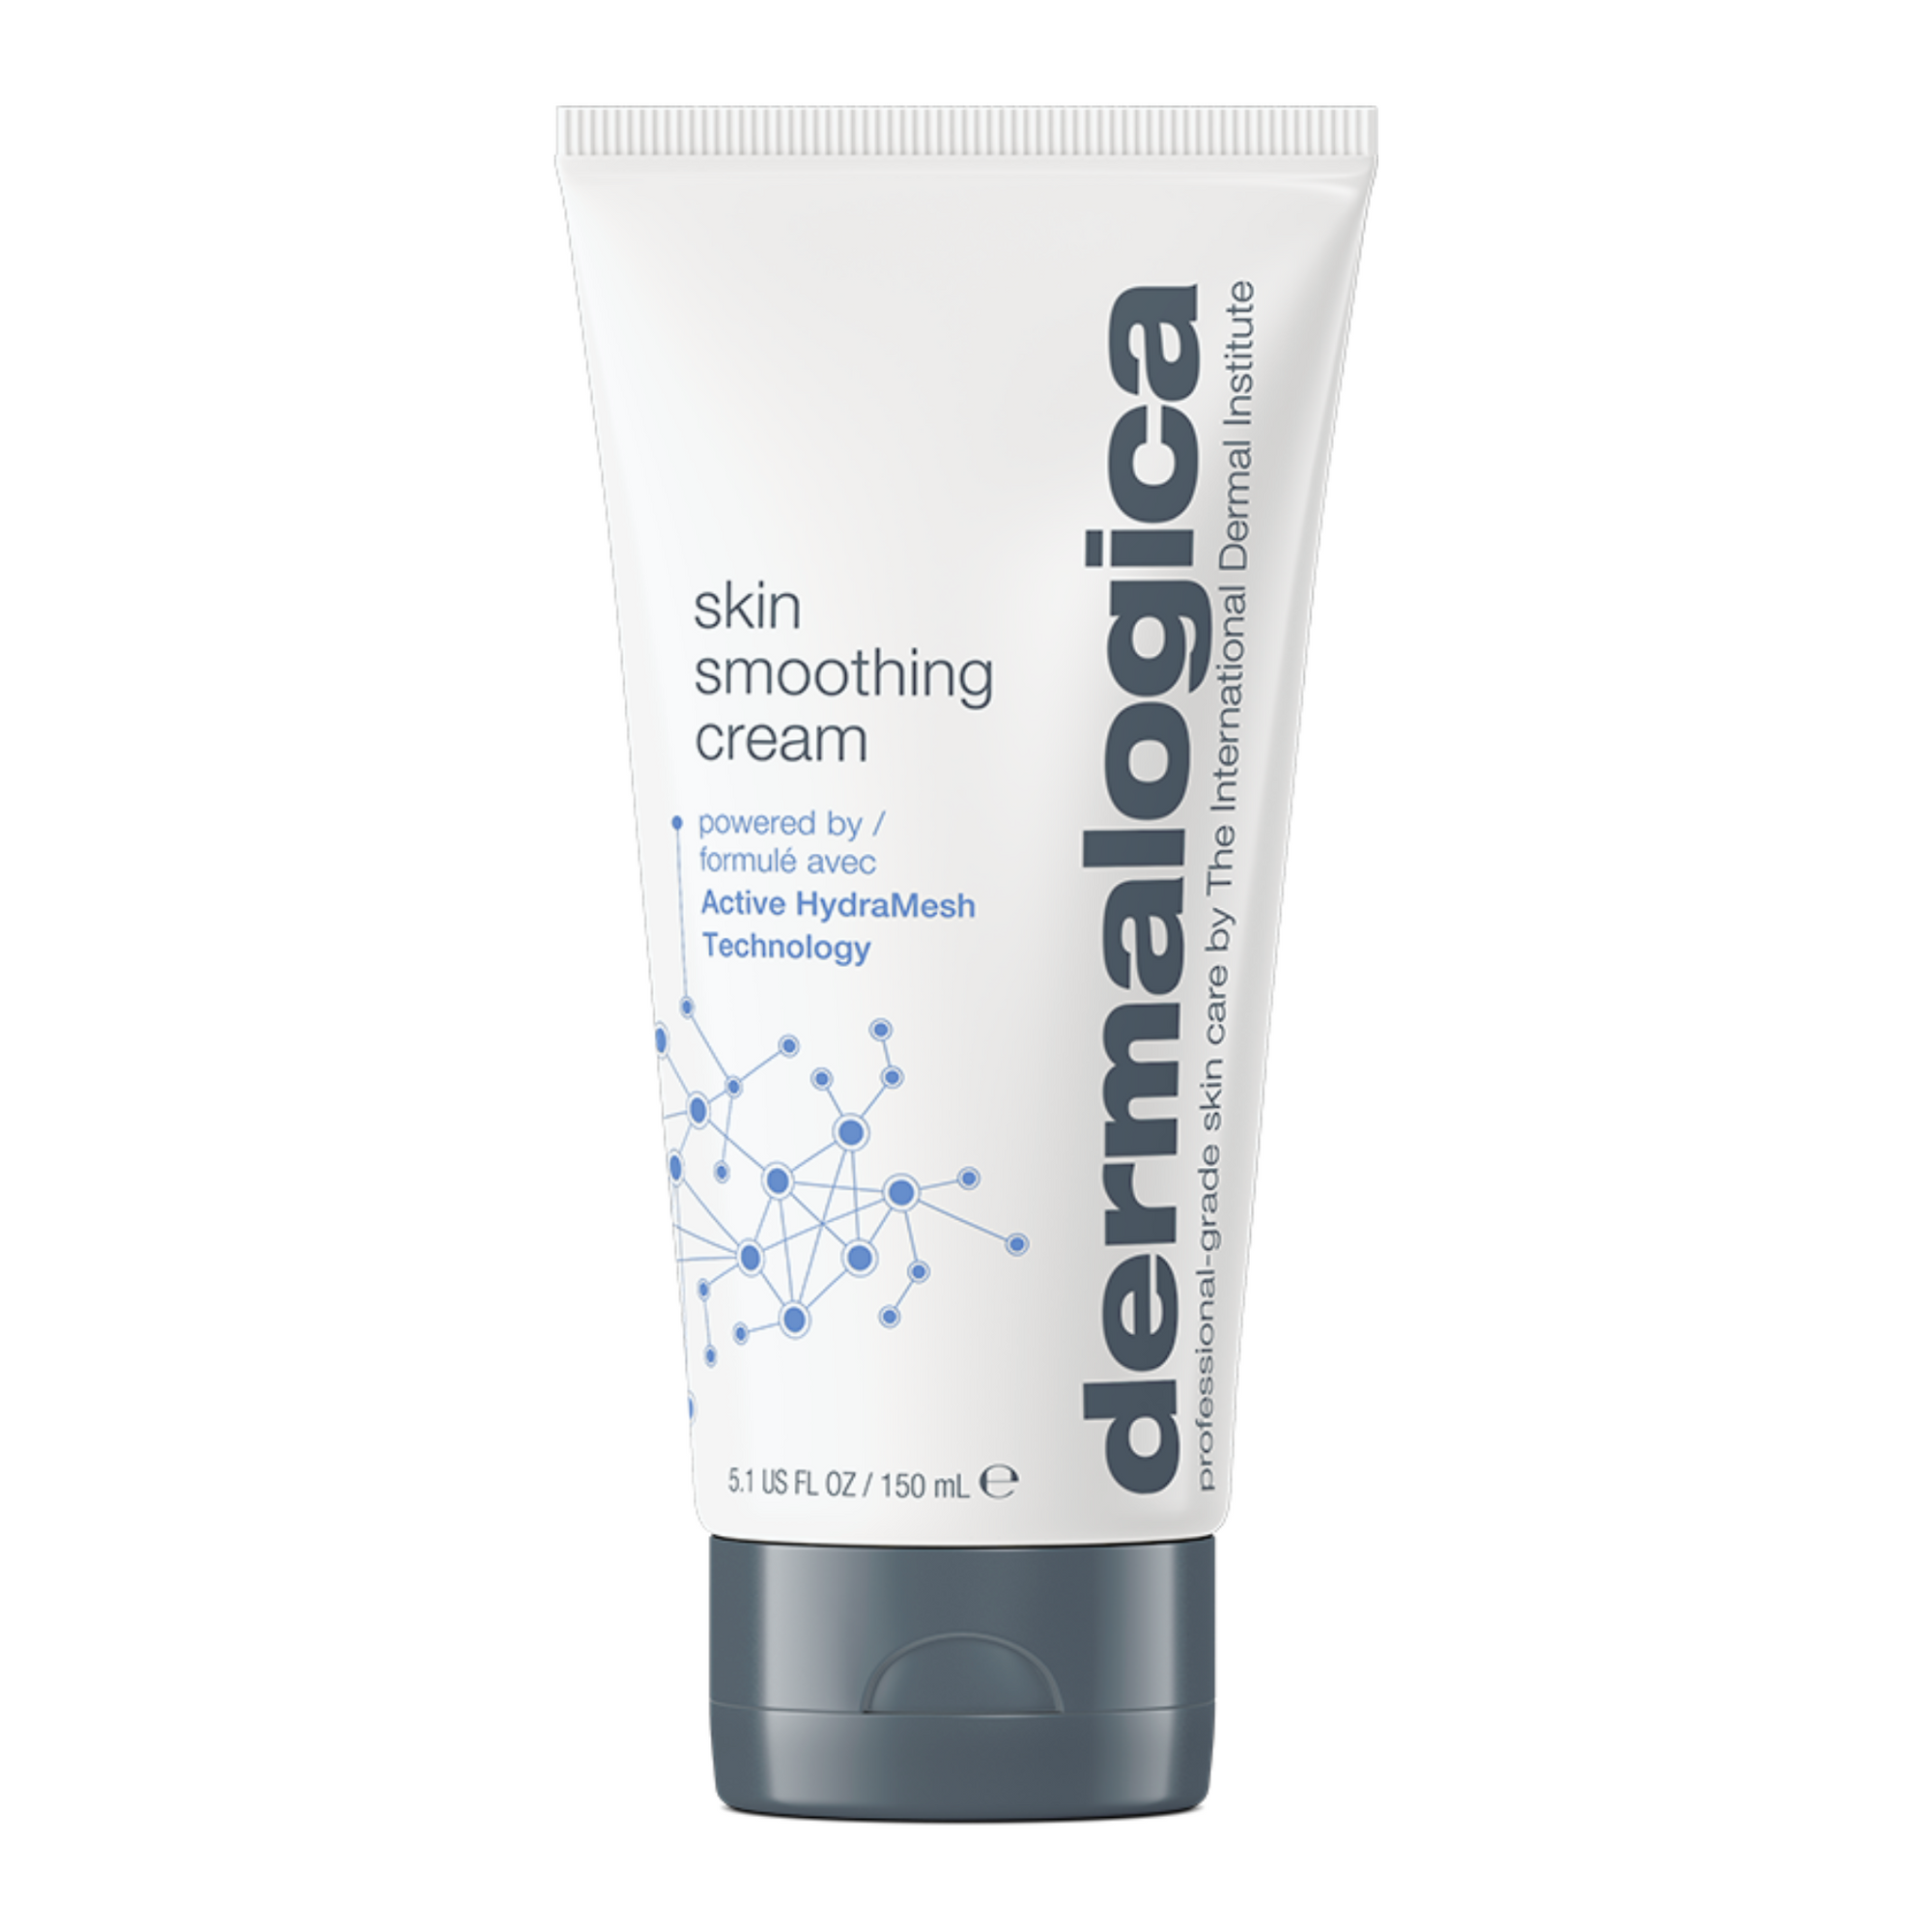 Dermalogica Skin Smoothing Cream 150ml Limited Edition Jumbo